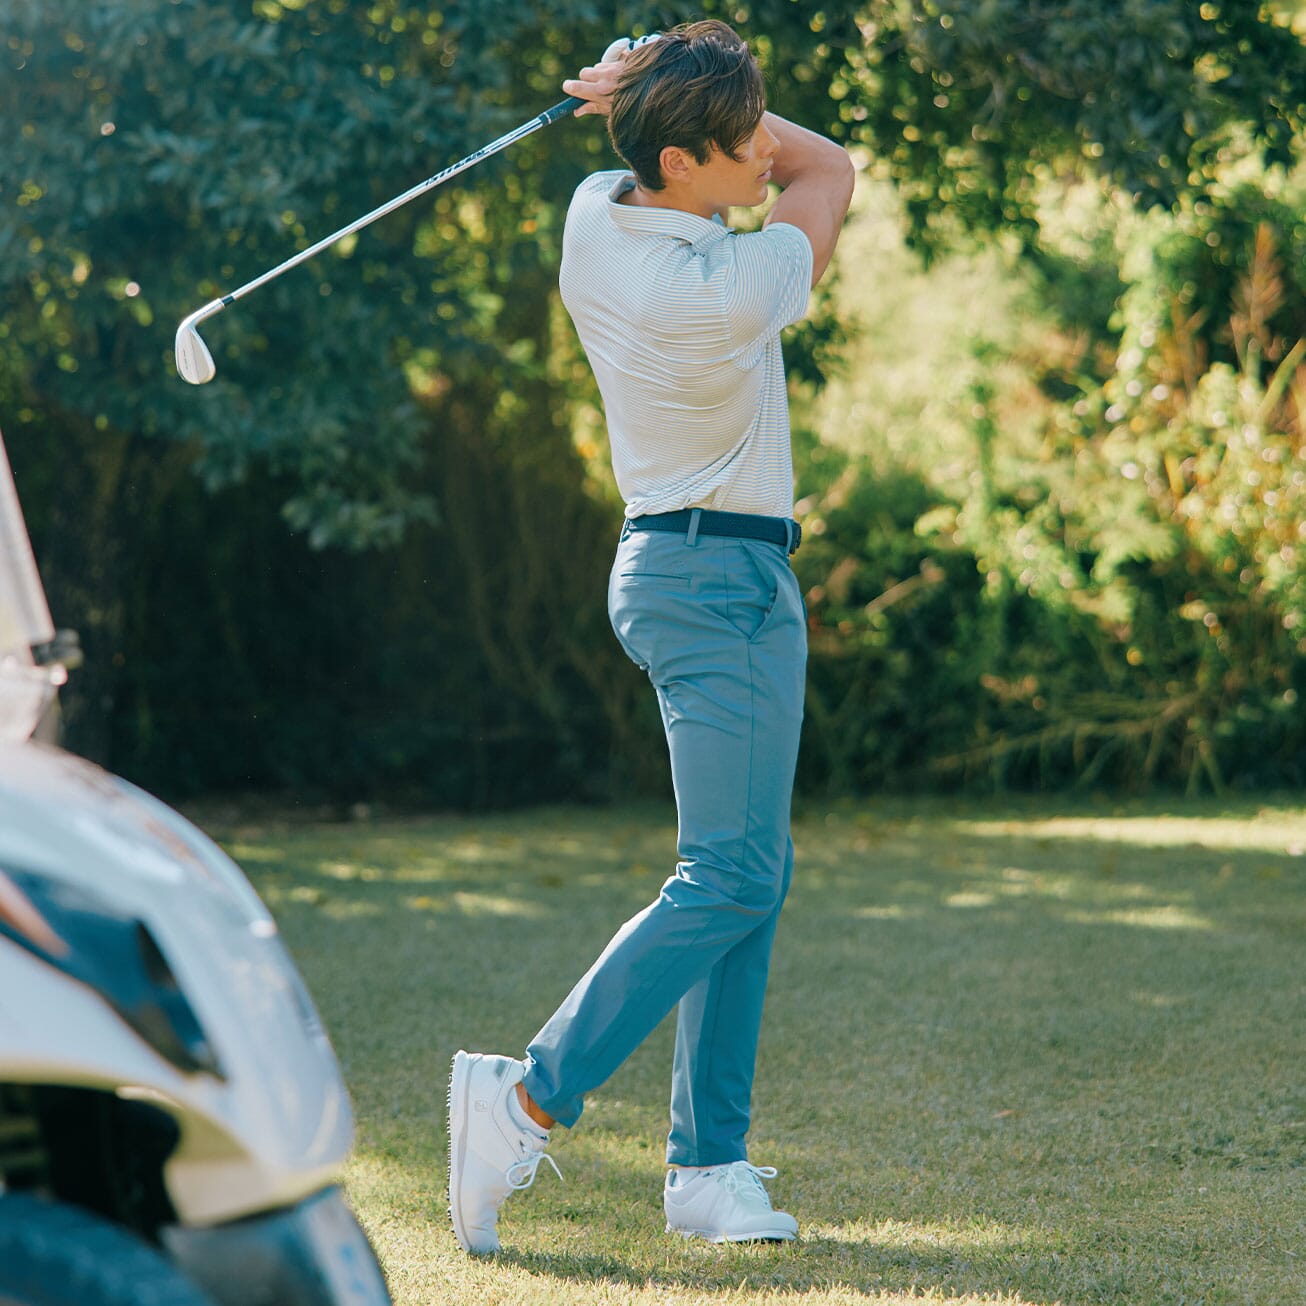 Man playing golf in versatile performance apparel